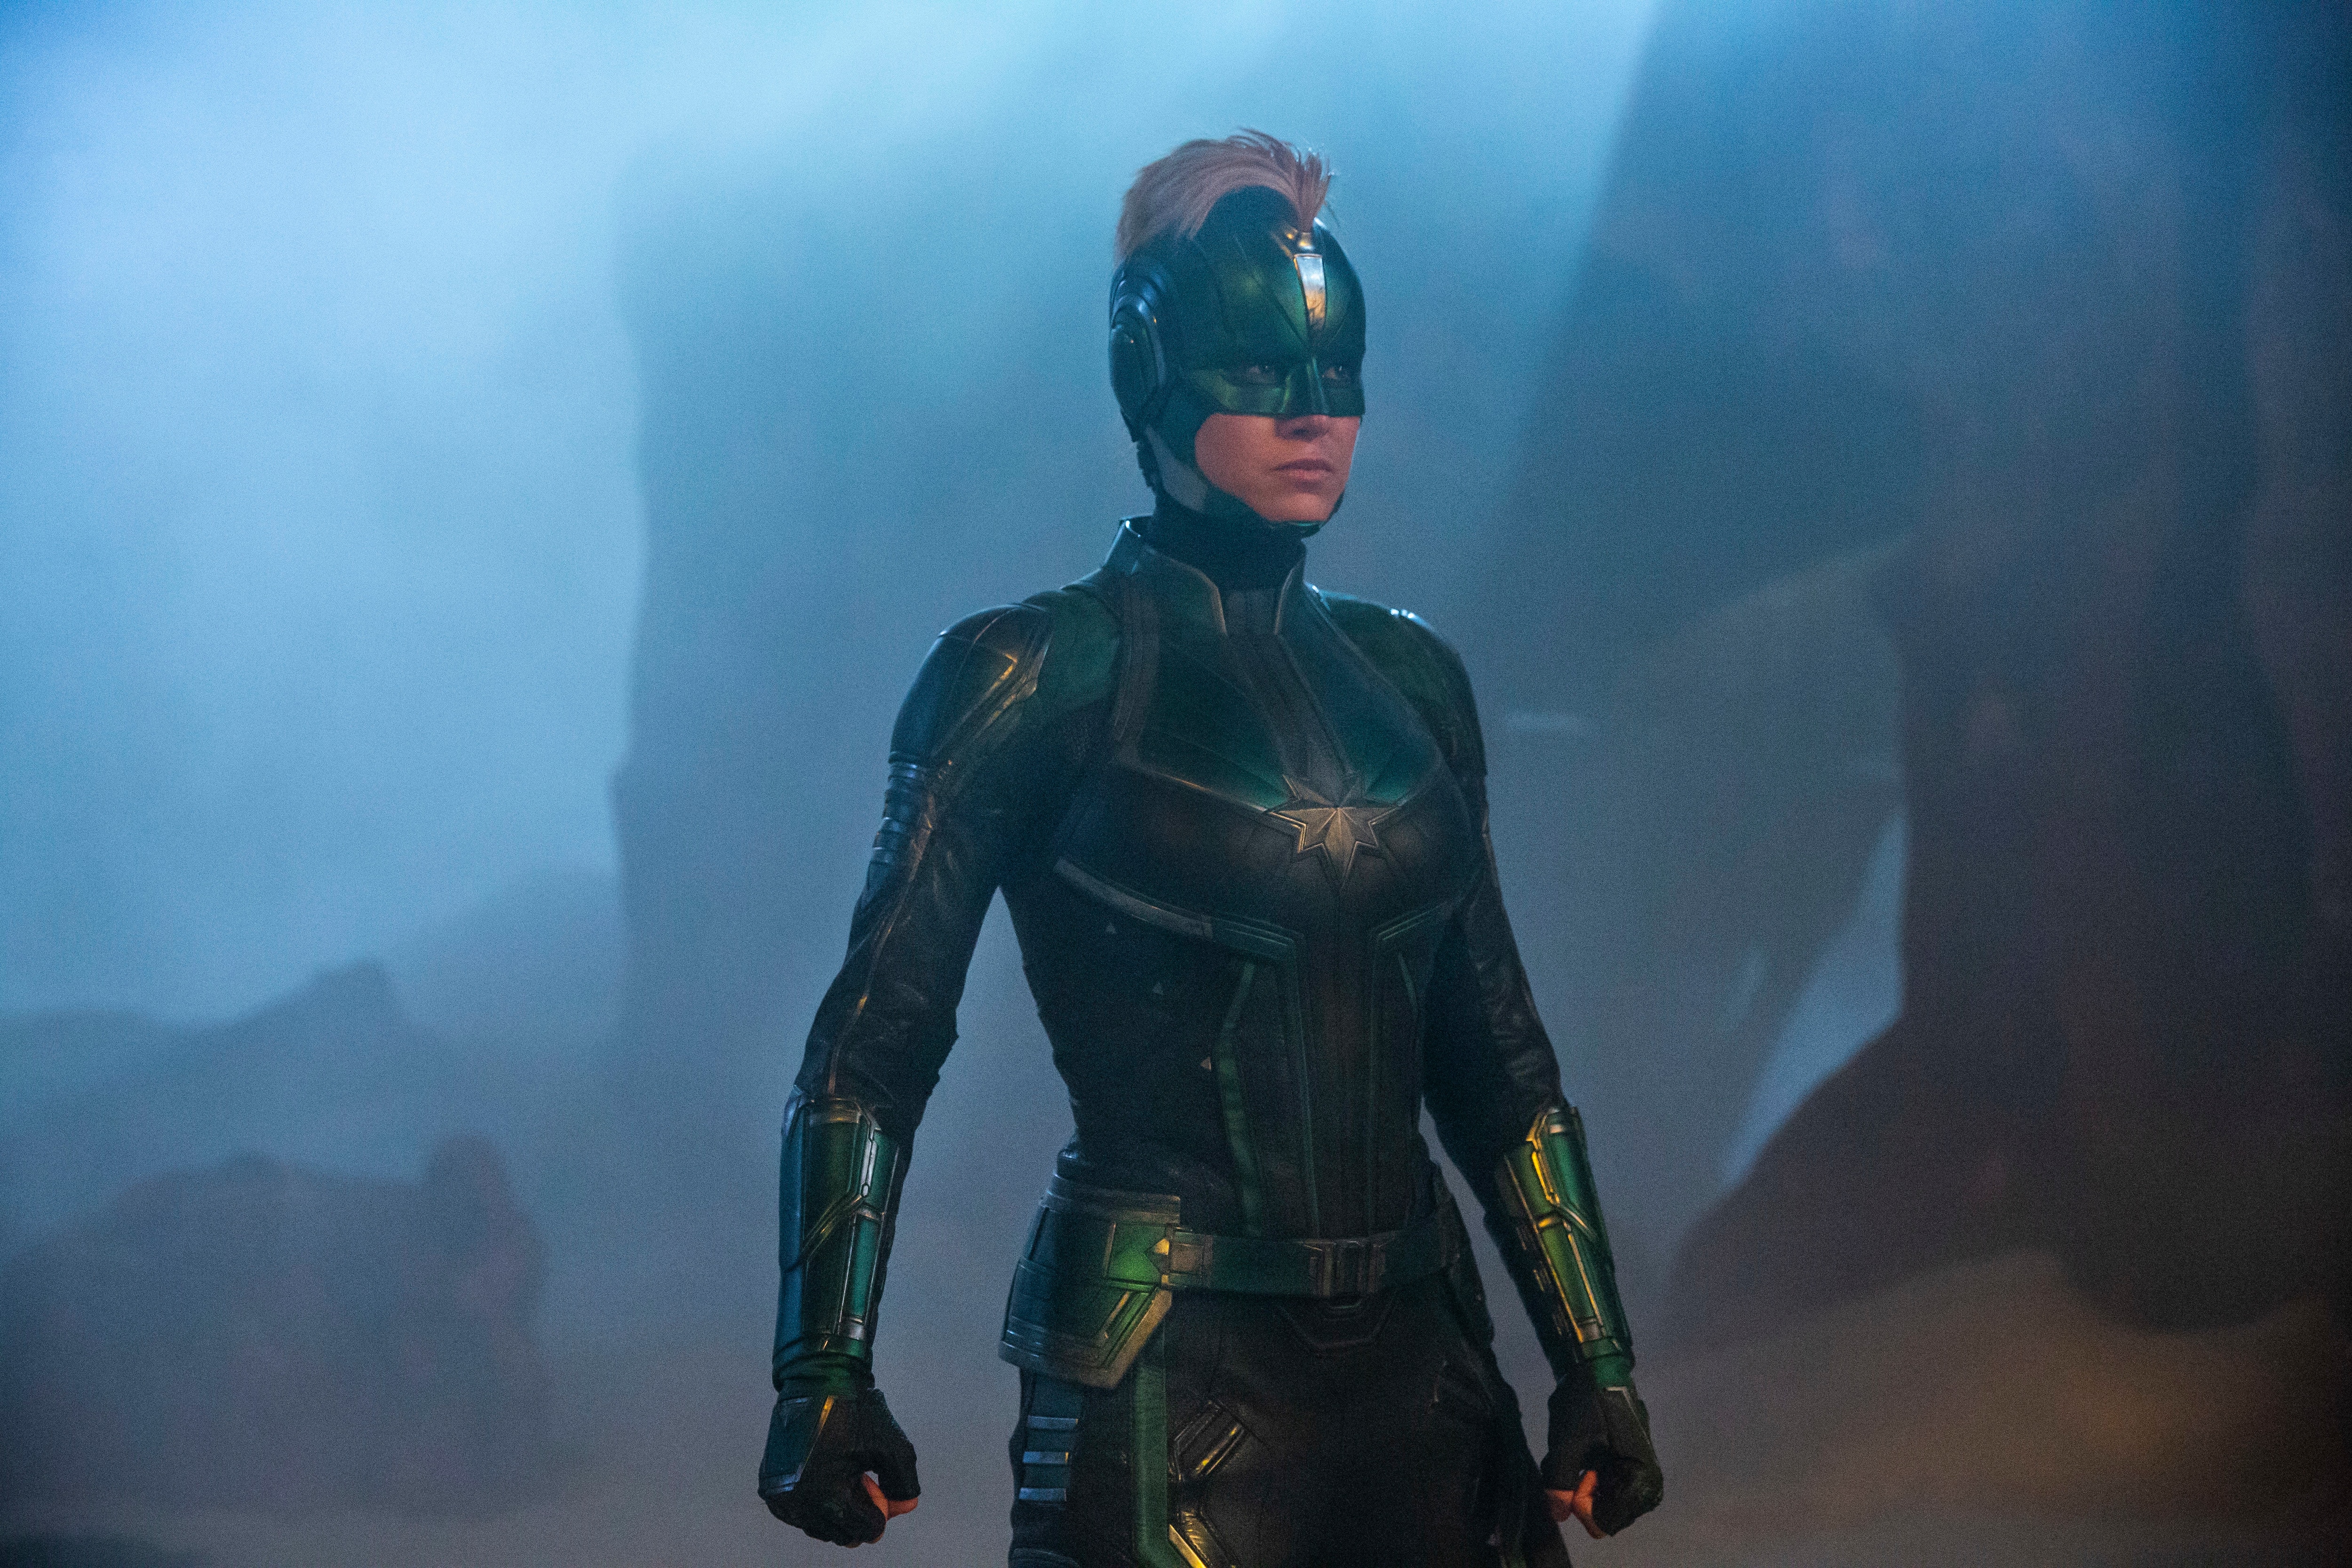 Brie Larson Captain Marvel Carol Danvers